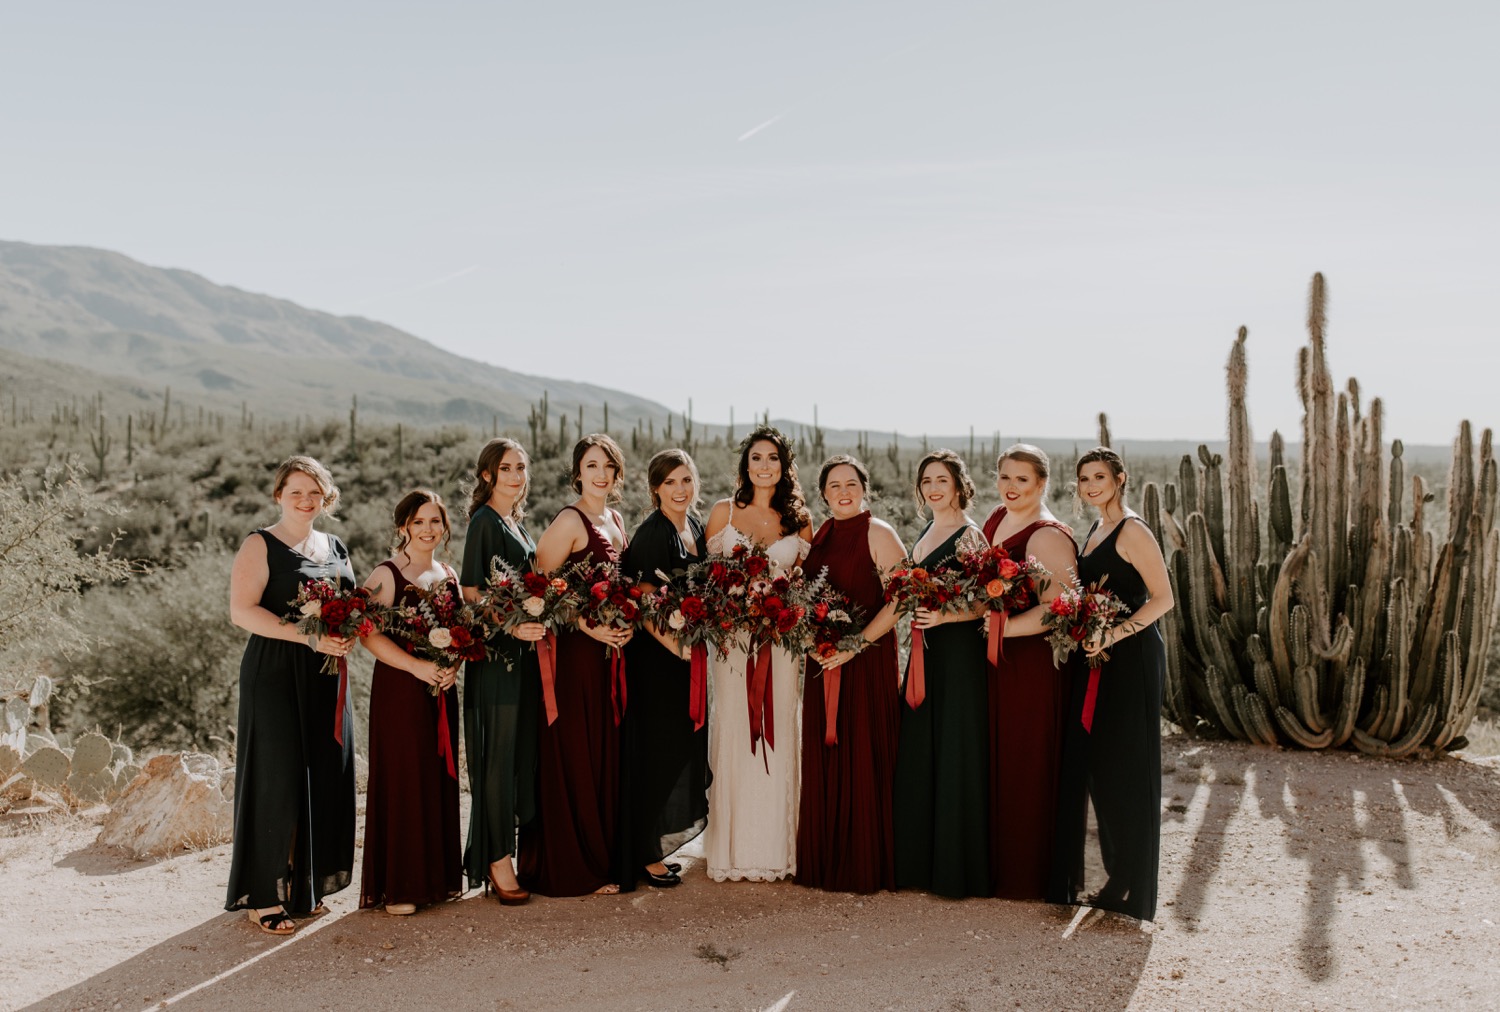 Jewel toned bridesmaid dress inspiration for a desert wedding at Tanque Verde Ranch wedding venue